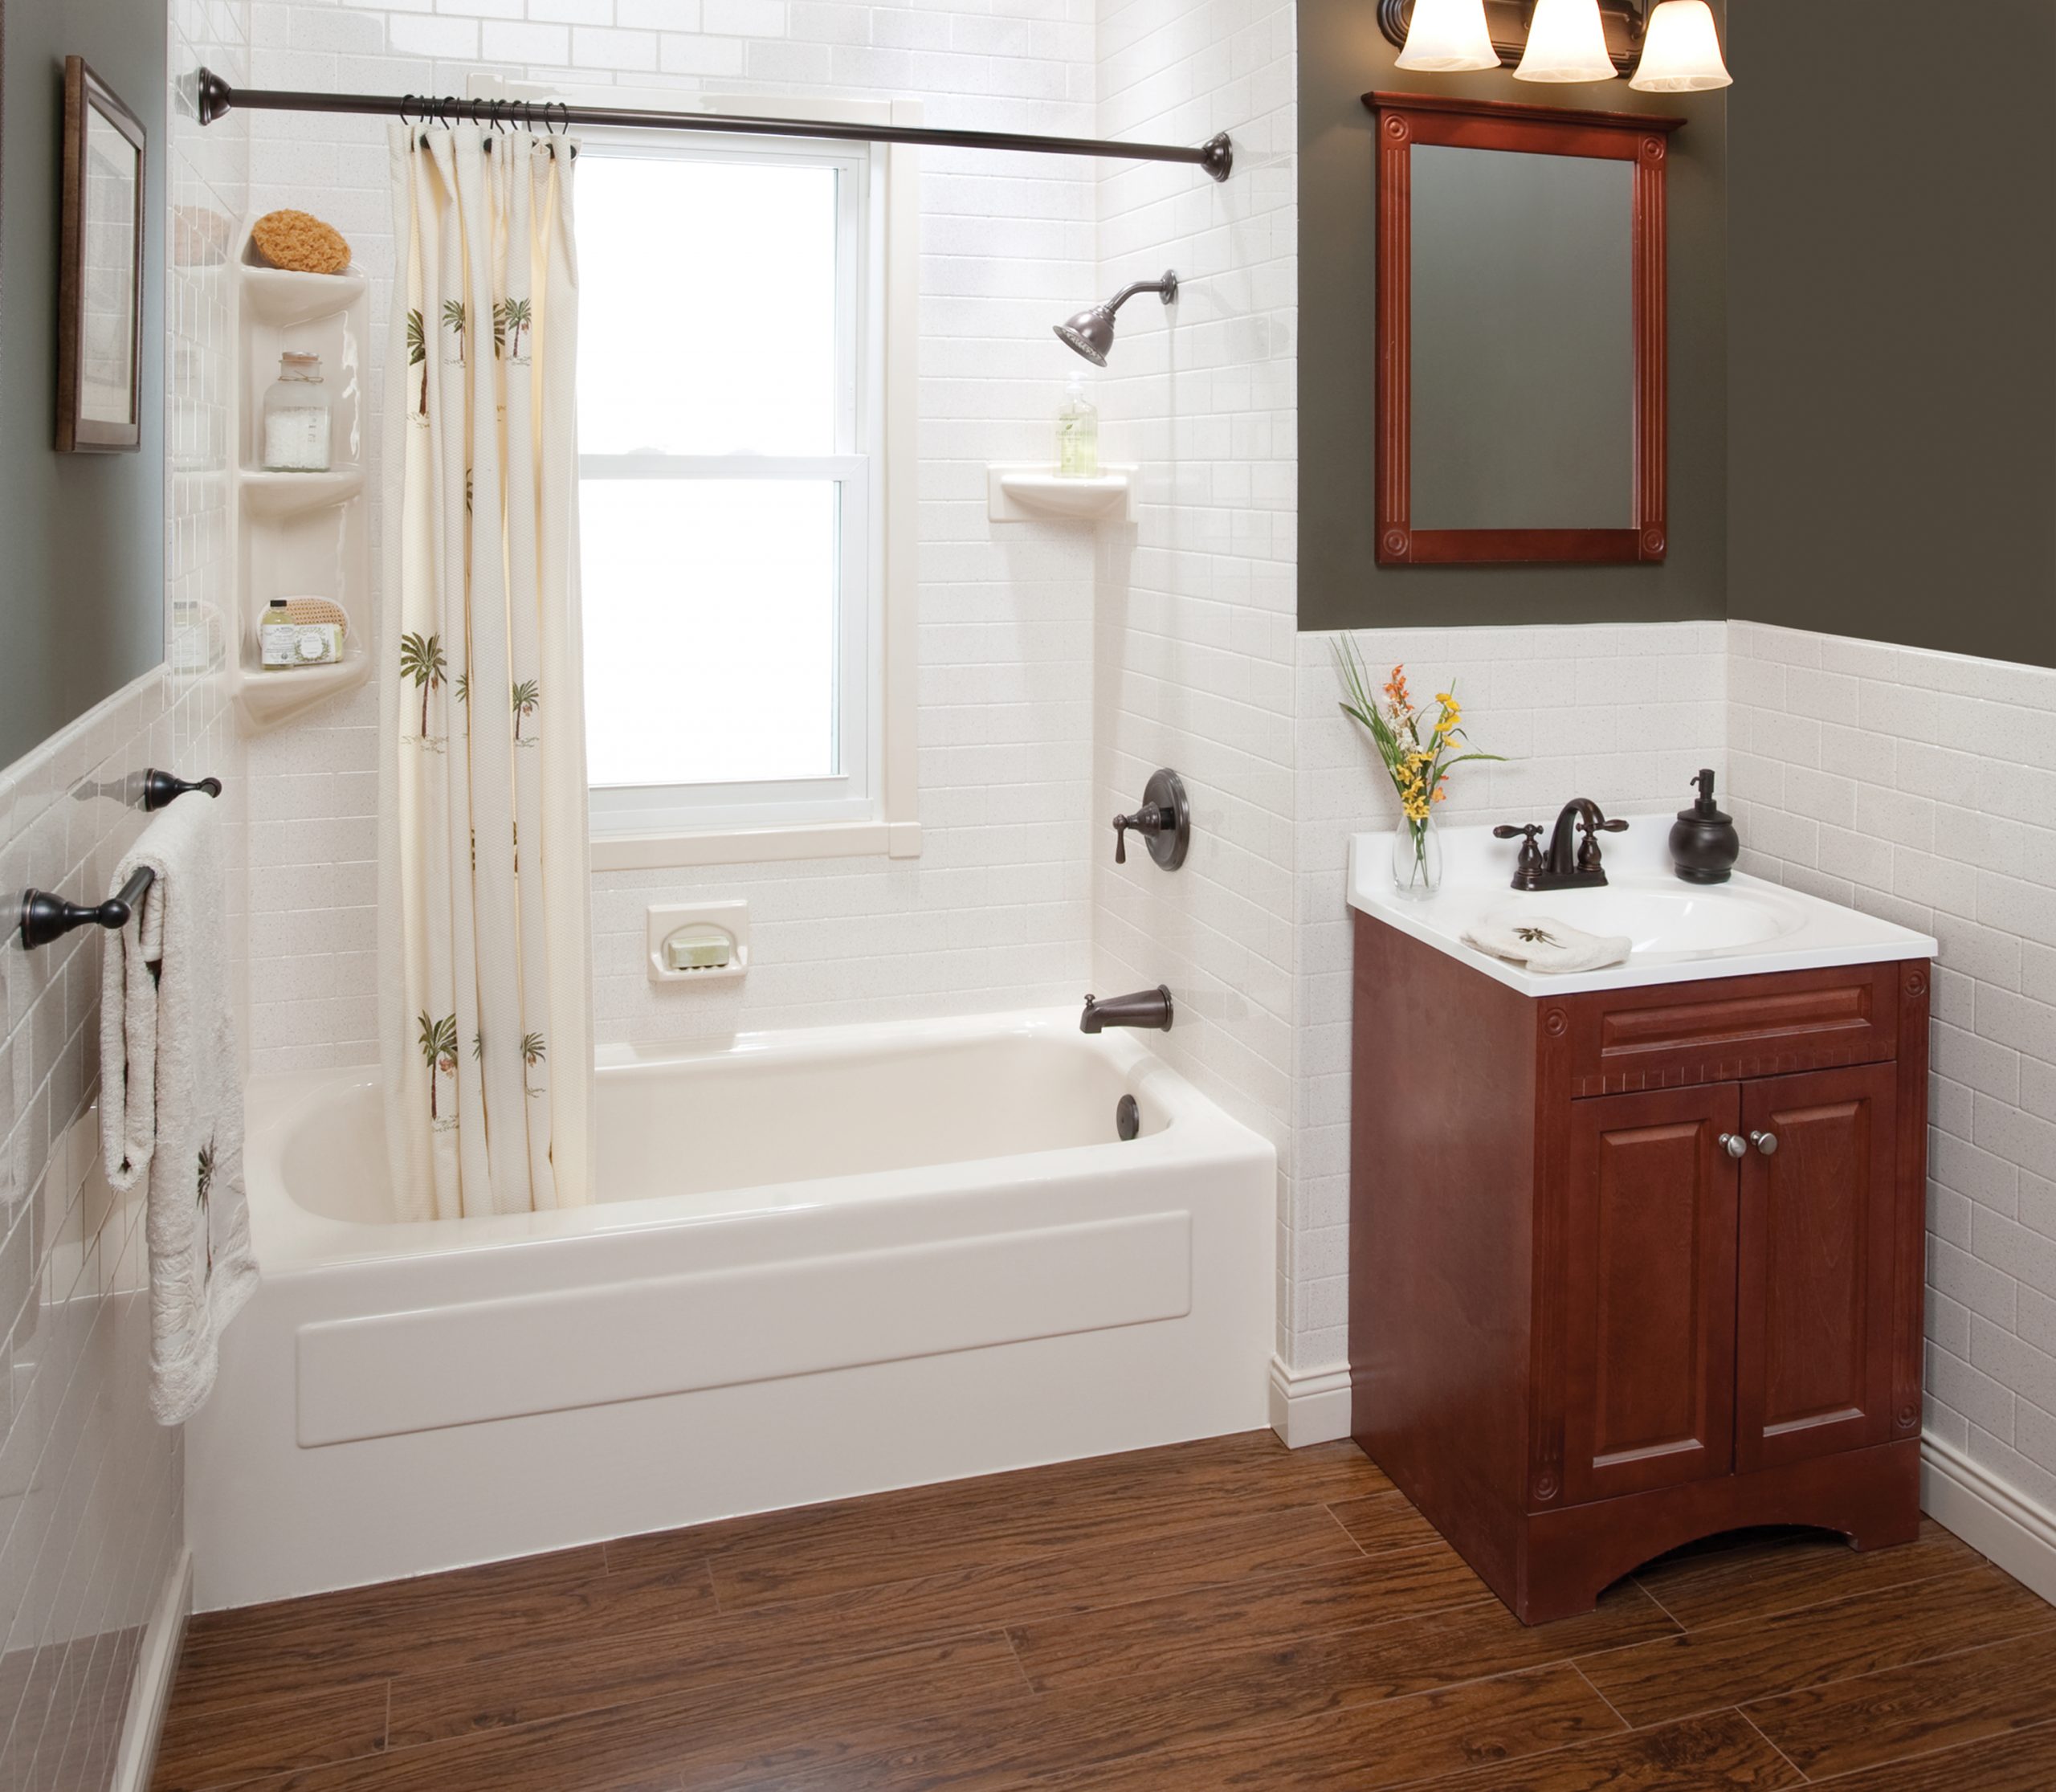 Luxury bathroom with vanity, washbasin, cabinet, and white bathtub.